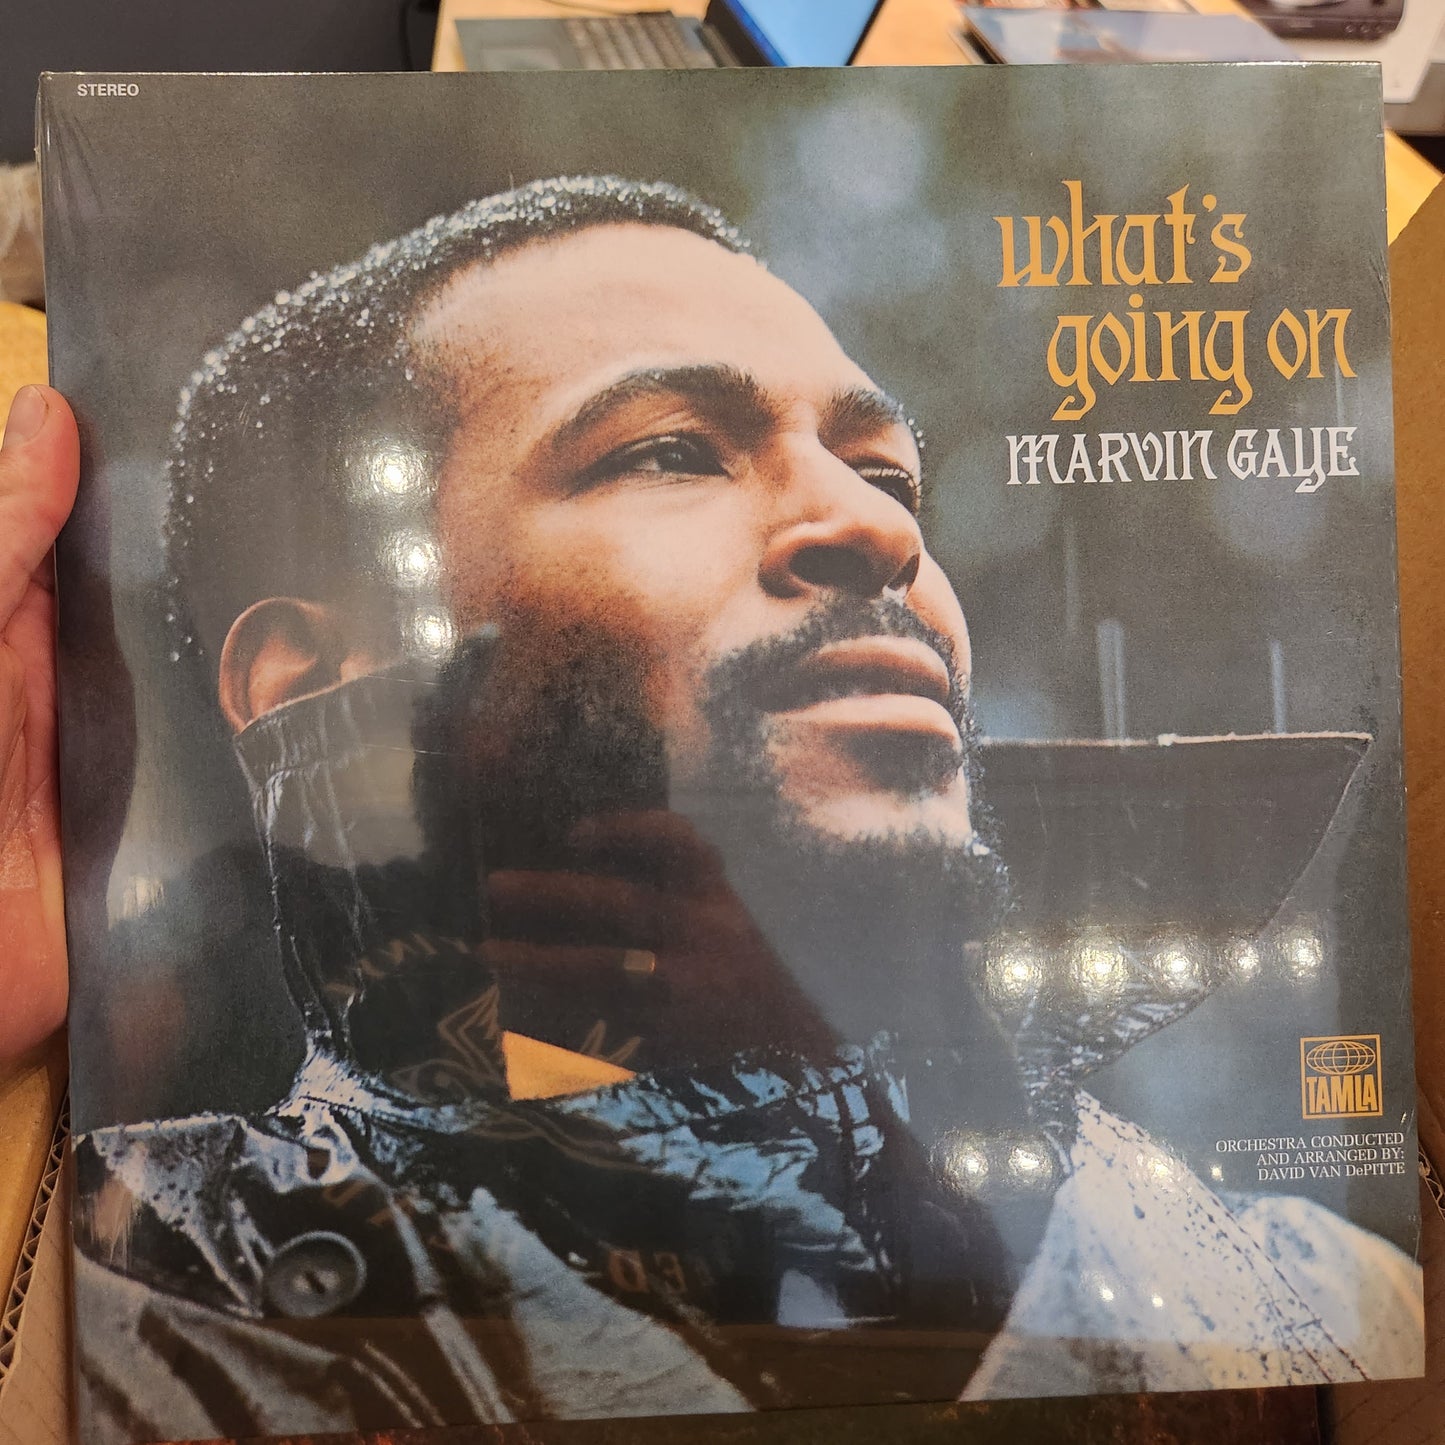 Marvin Gaye - What's Going On? - Vinyl LP